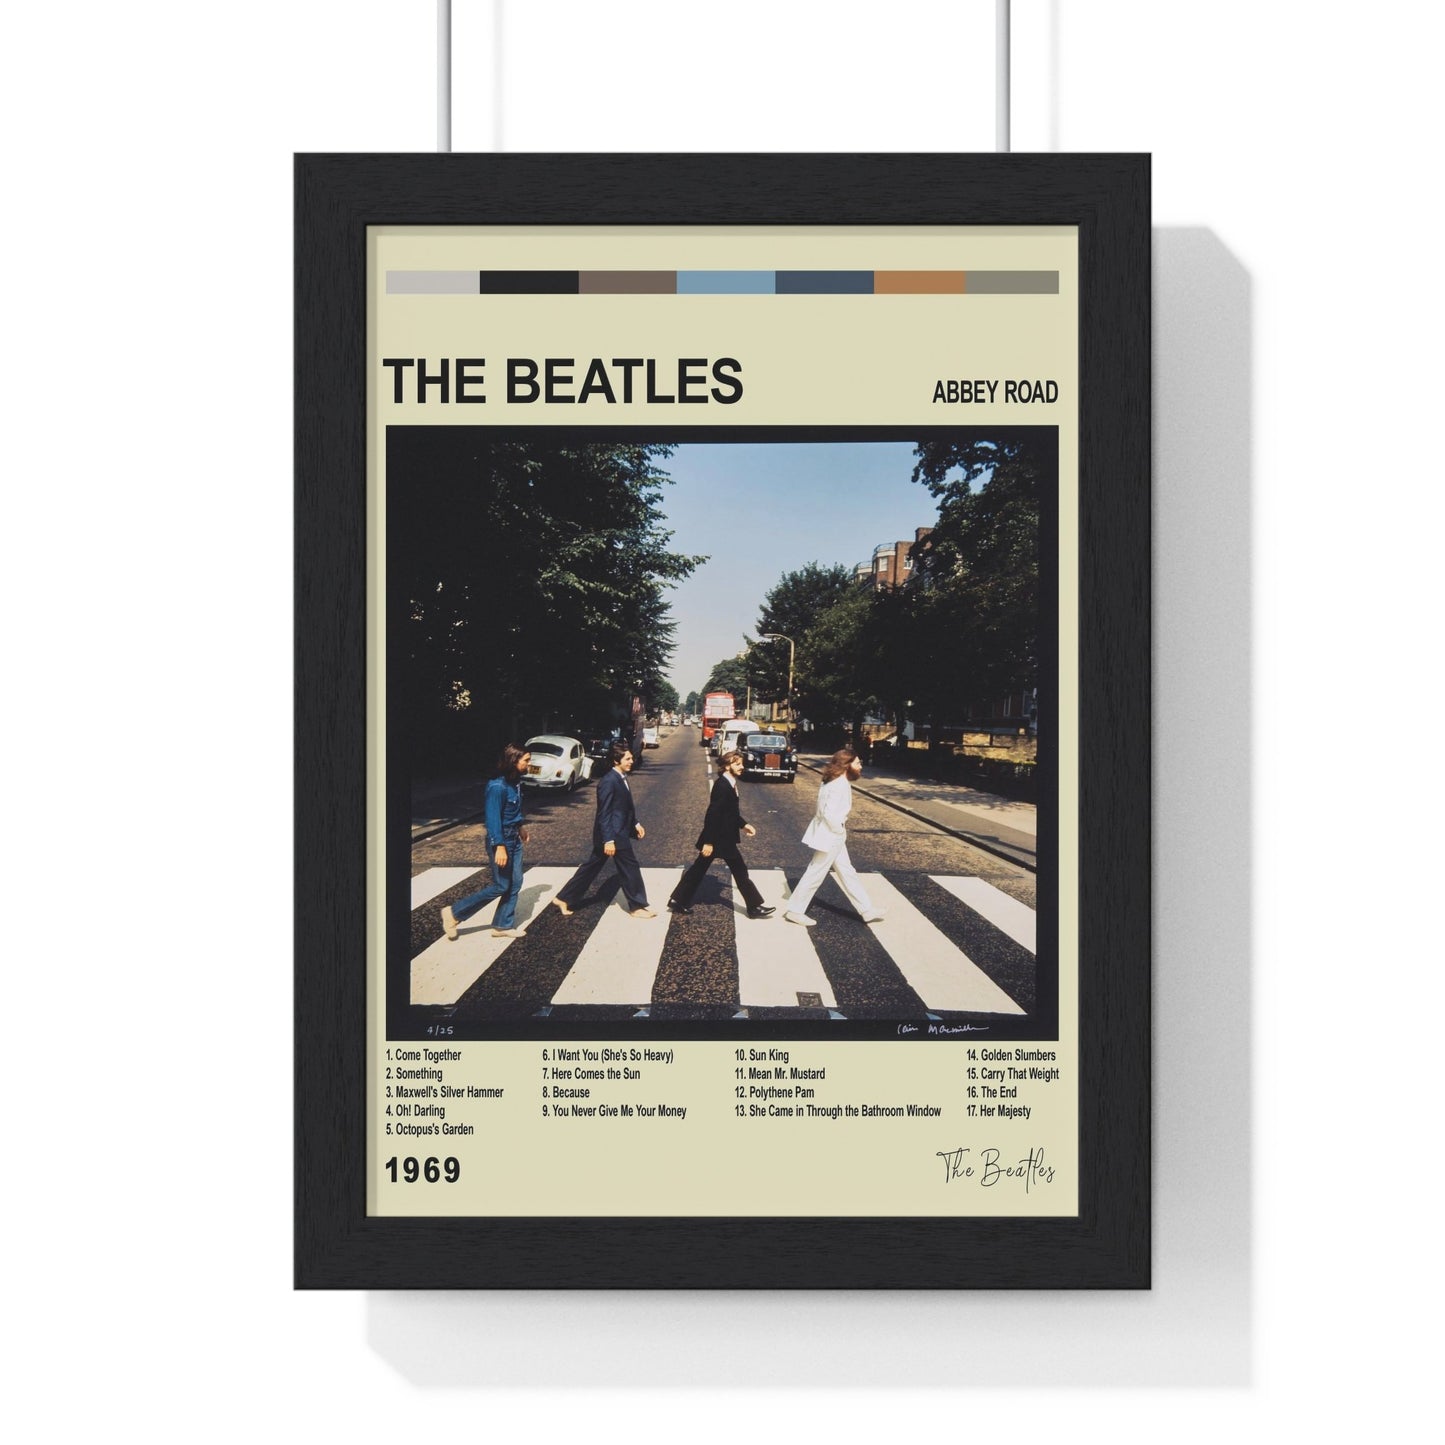 The Beatles - Album Poster - Poster Kingz